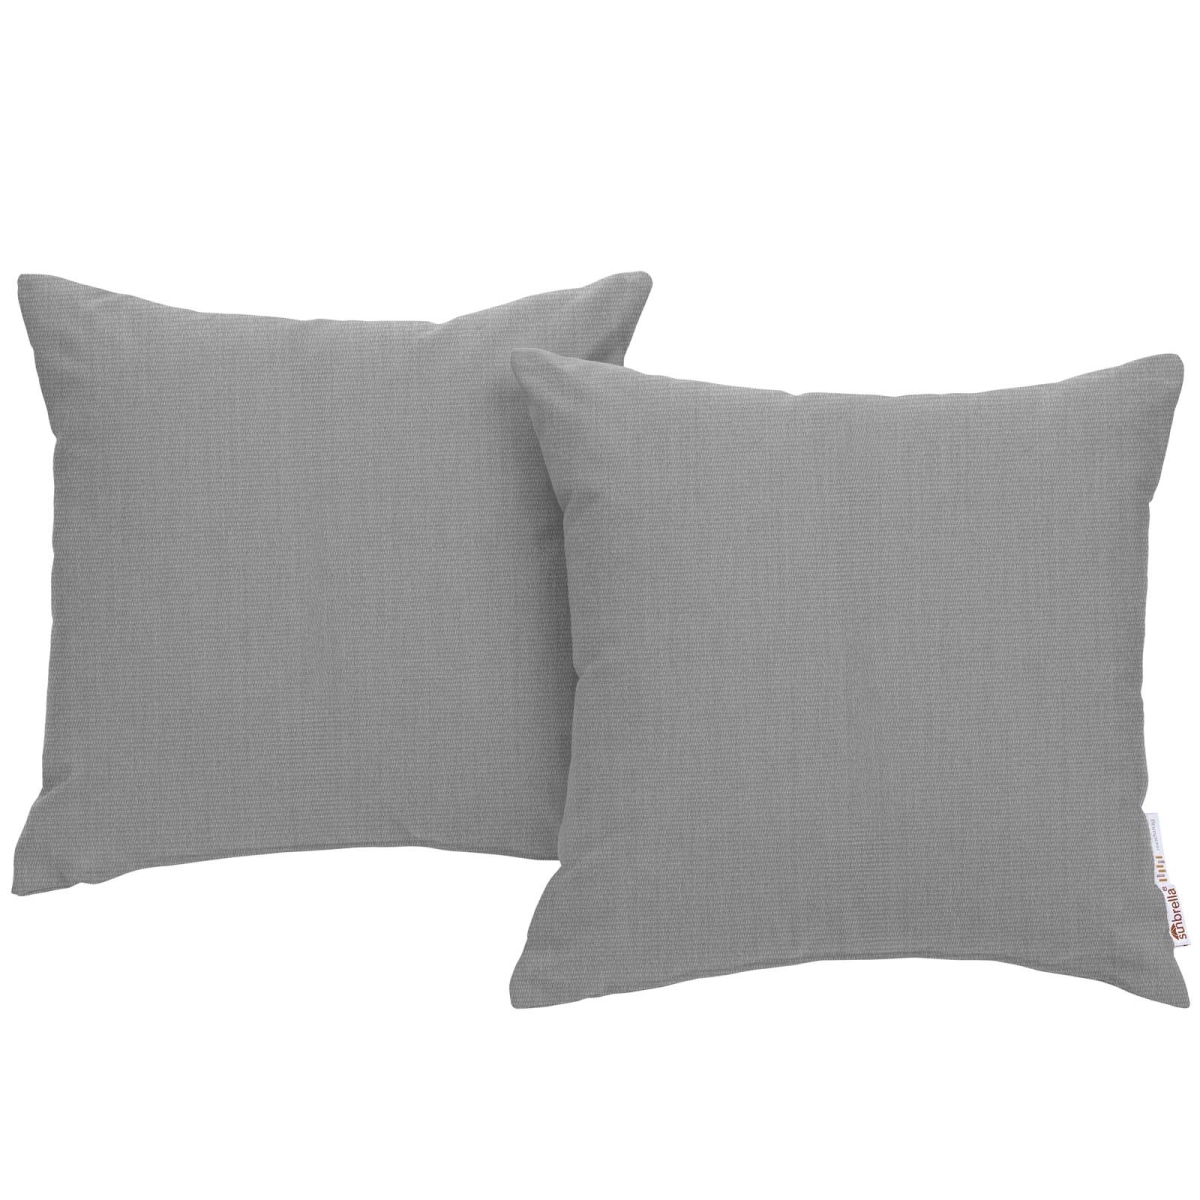 Eei-2002-gry 17.5 X 4 In. Summon Outdoor Patio Pillow Set - Gray, 2 Piece